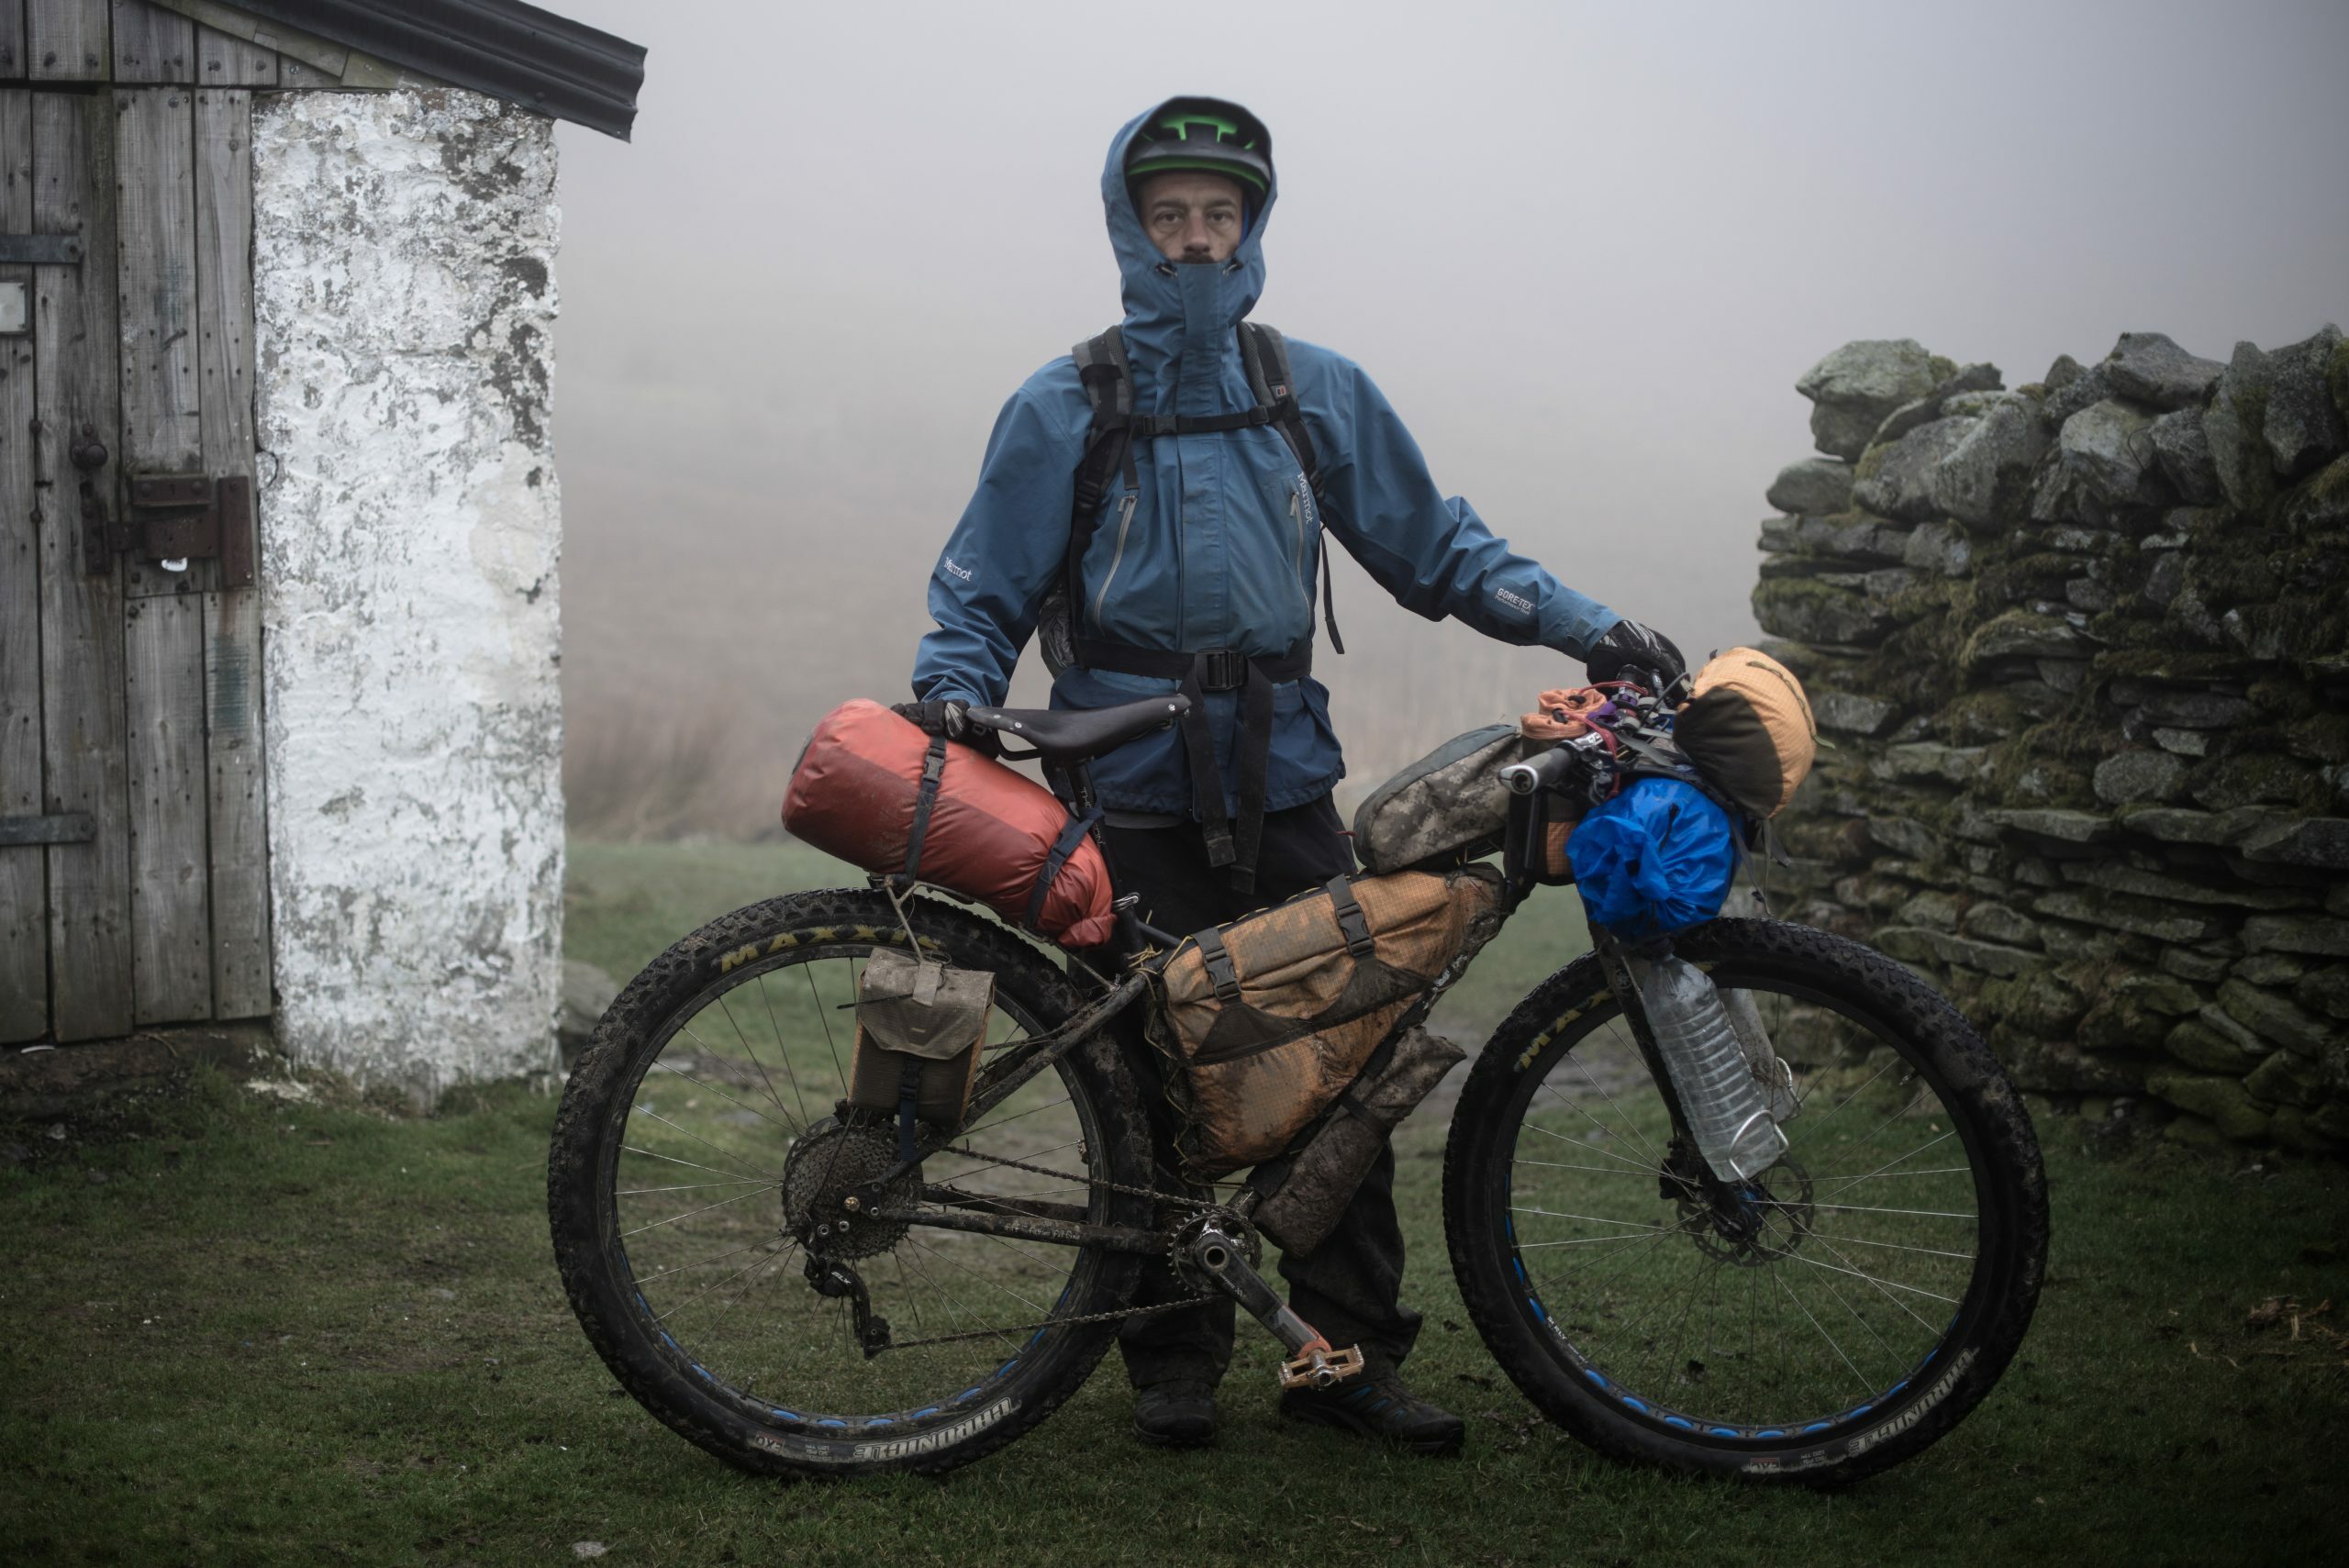 Southern Lite Packs Owner, Luke, bikepacking in the UK